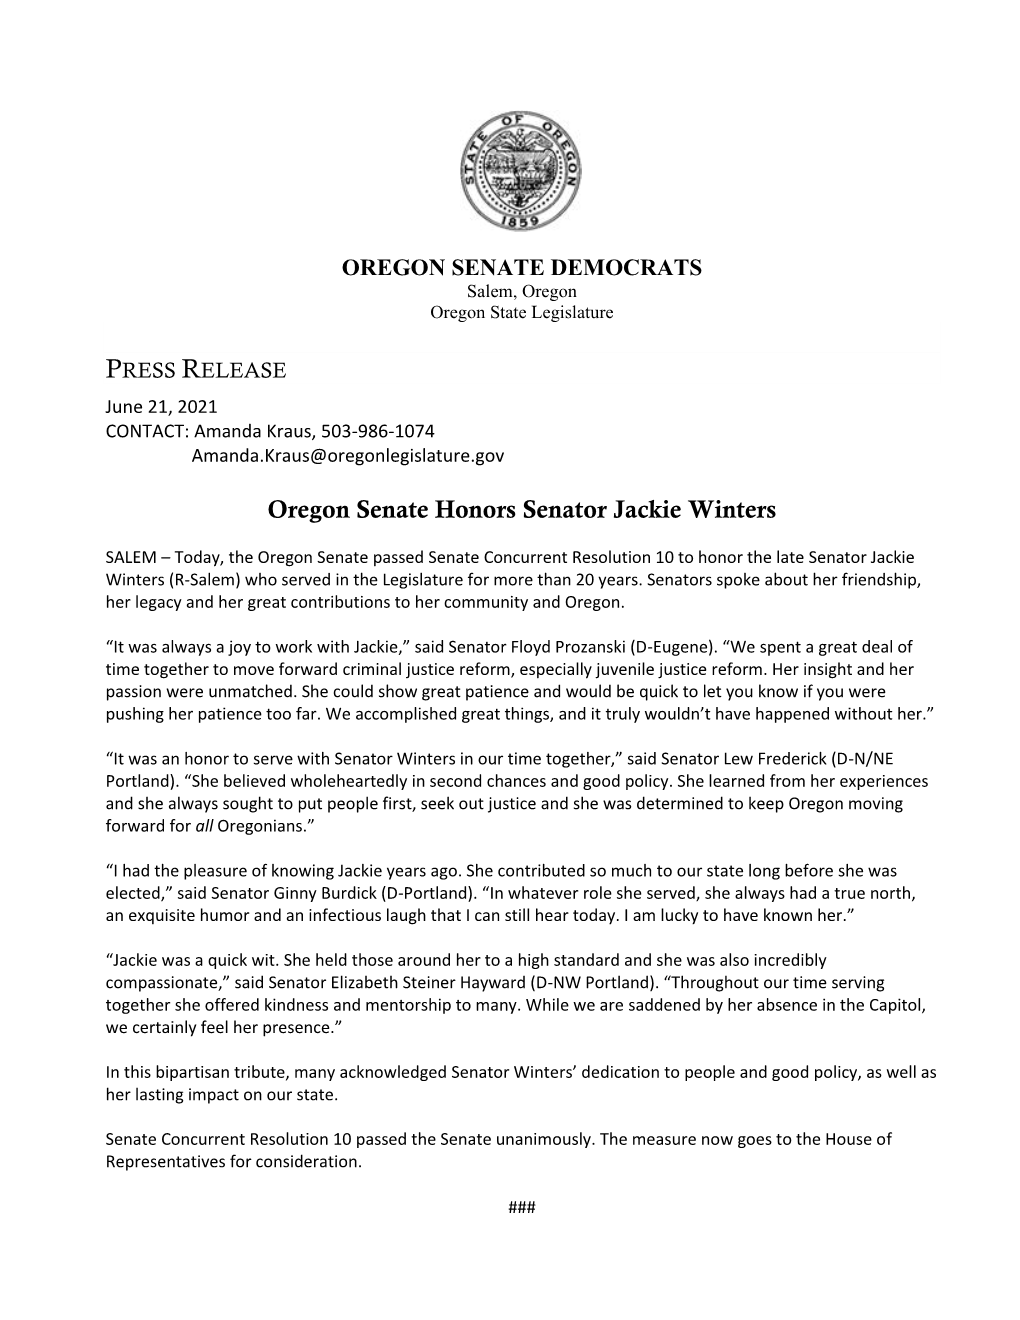 Oregon Senate Honors Senator Jackie Winters